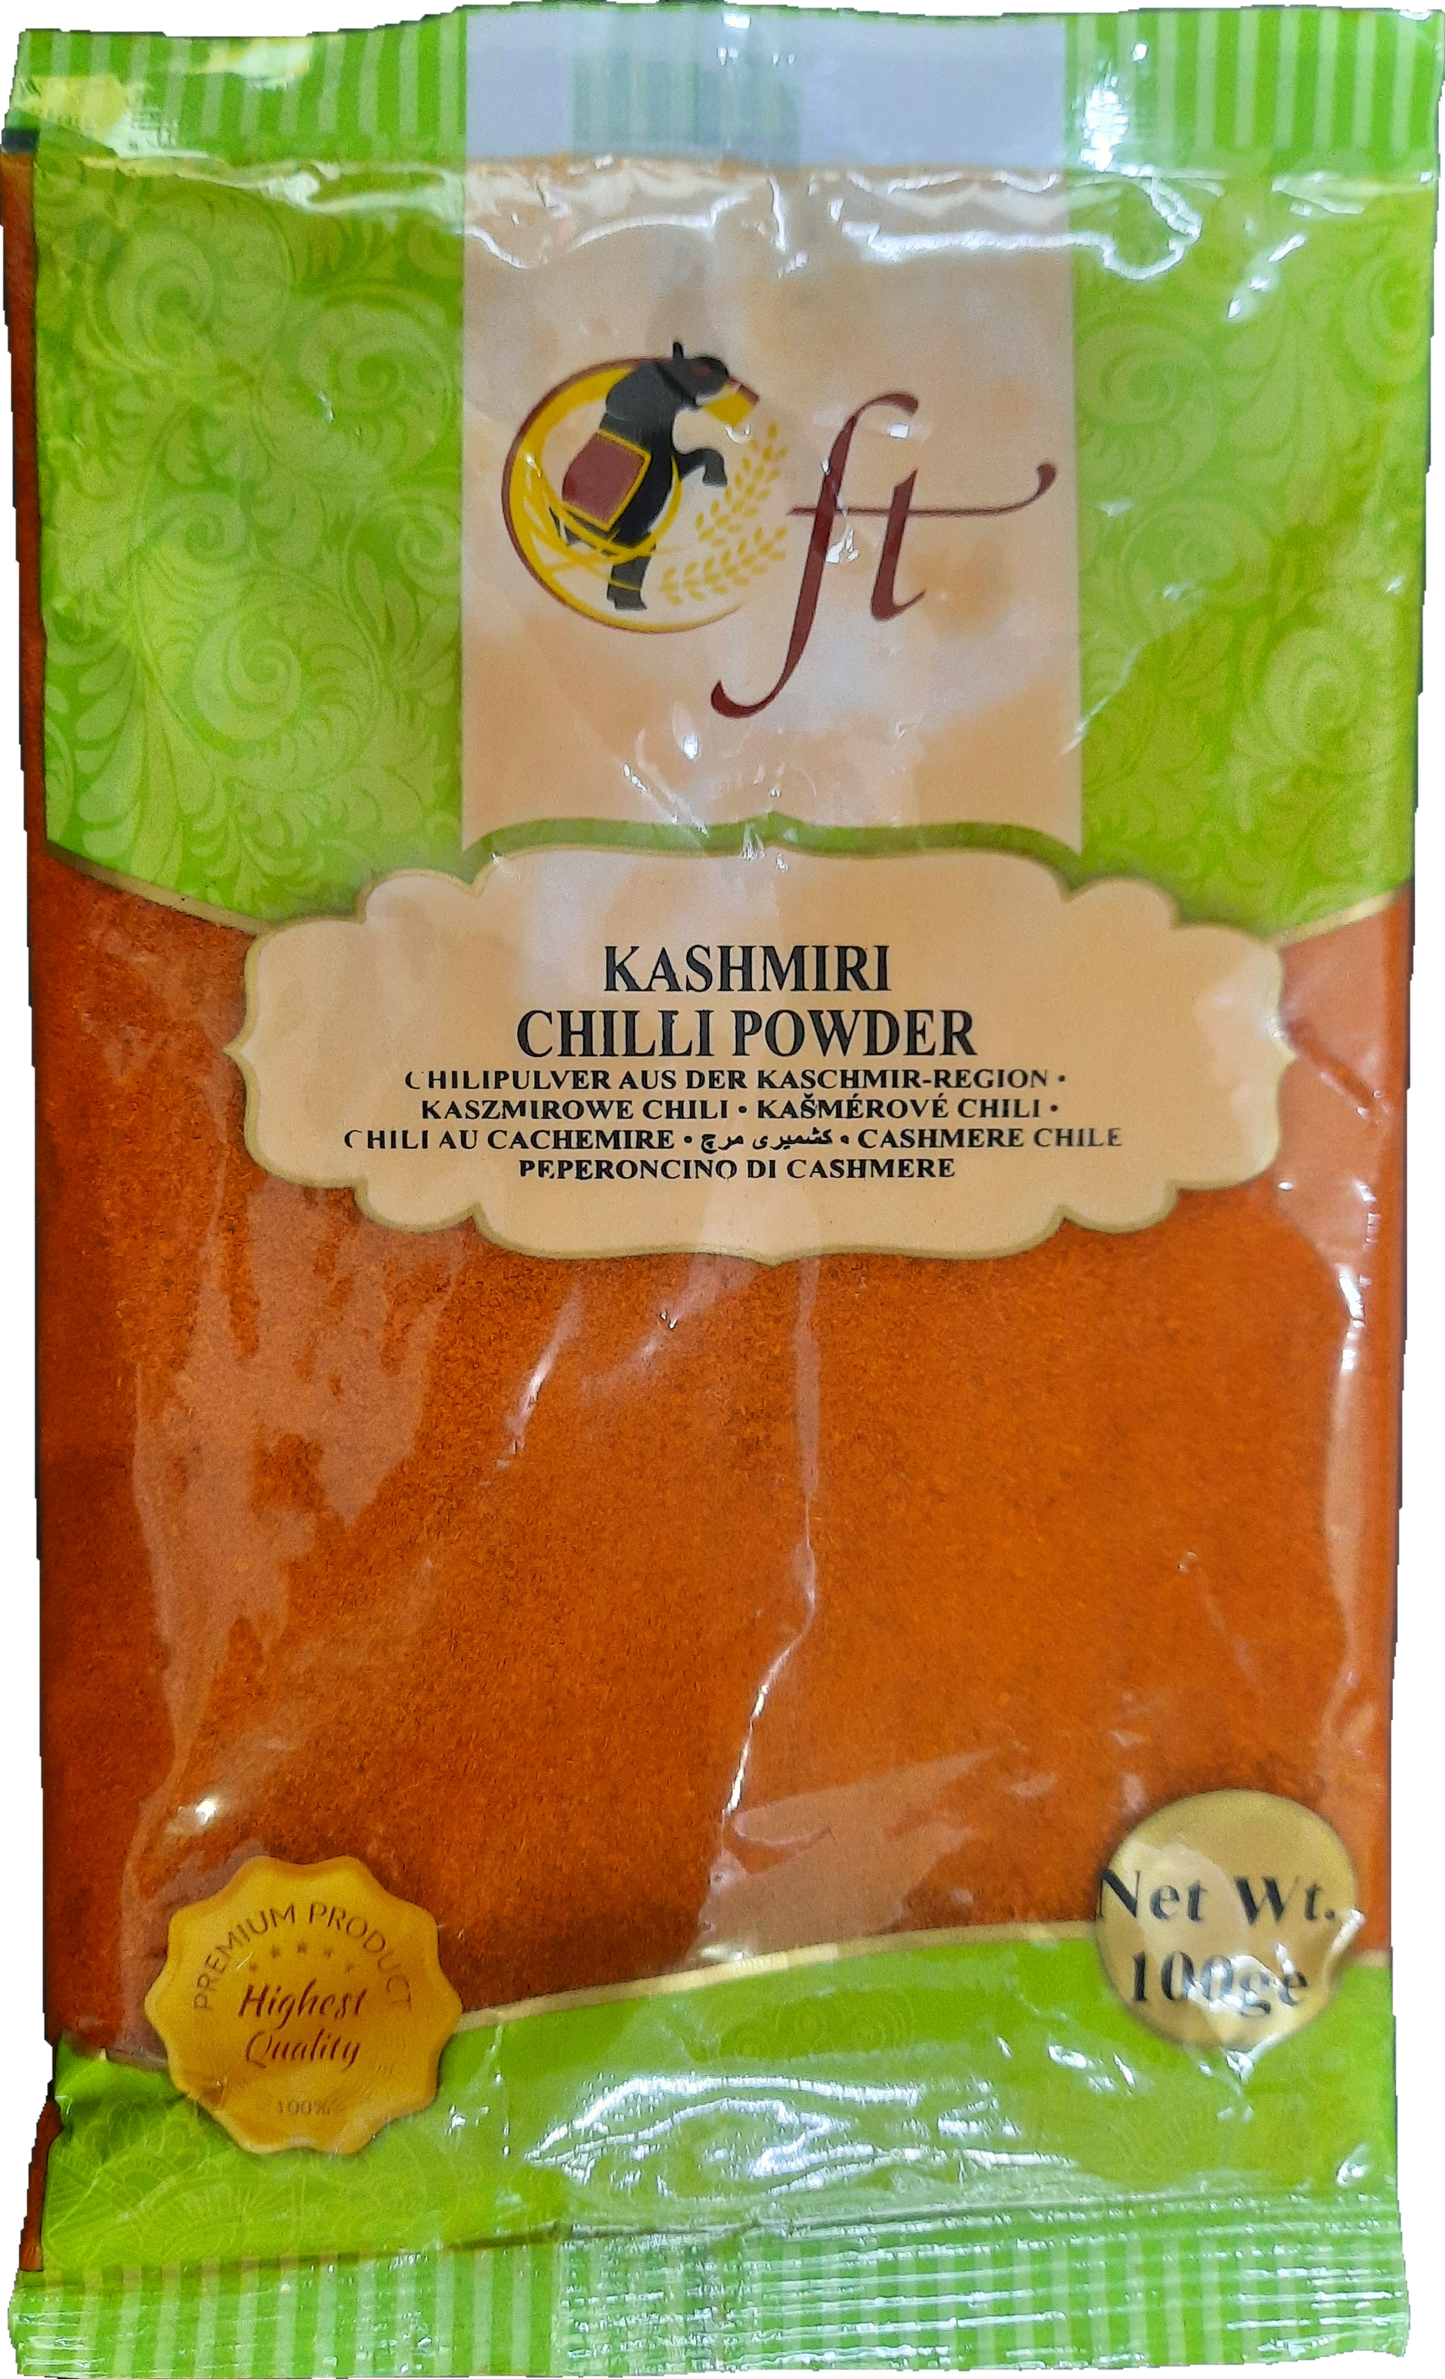 Cft Chilli Powder Kashmiri 100gm